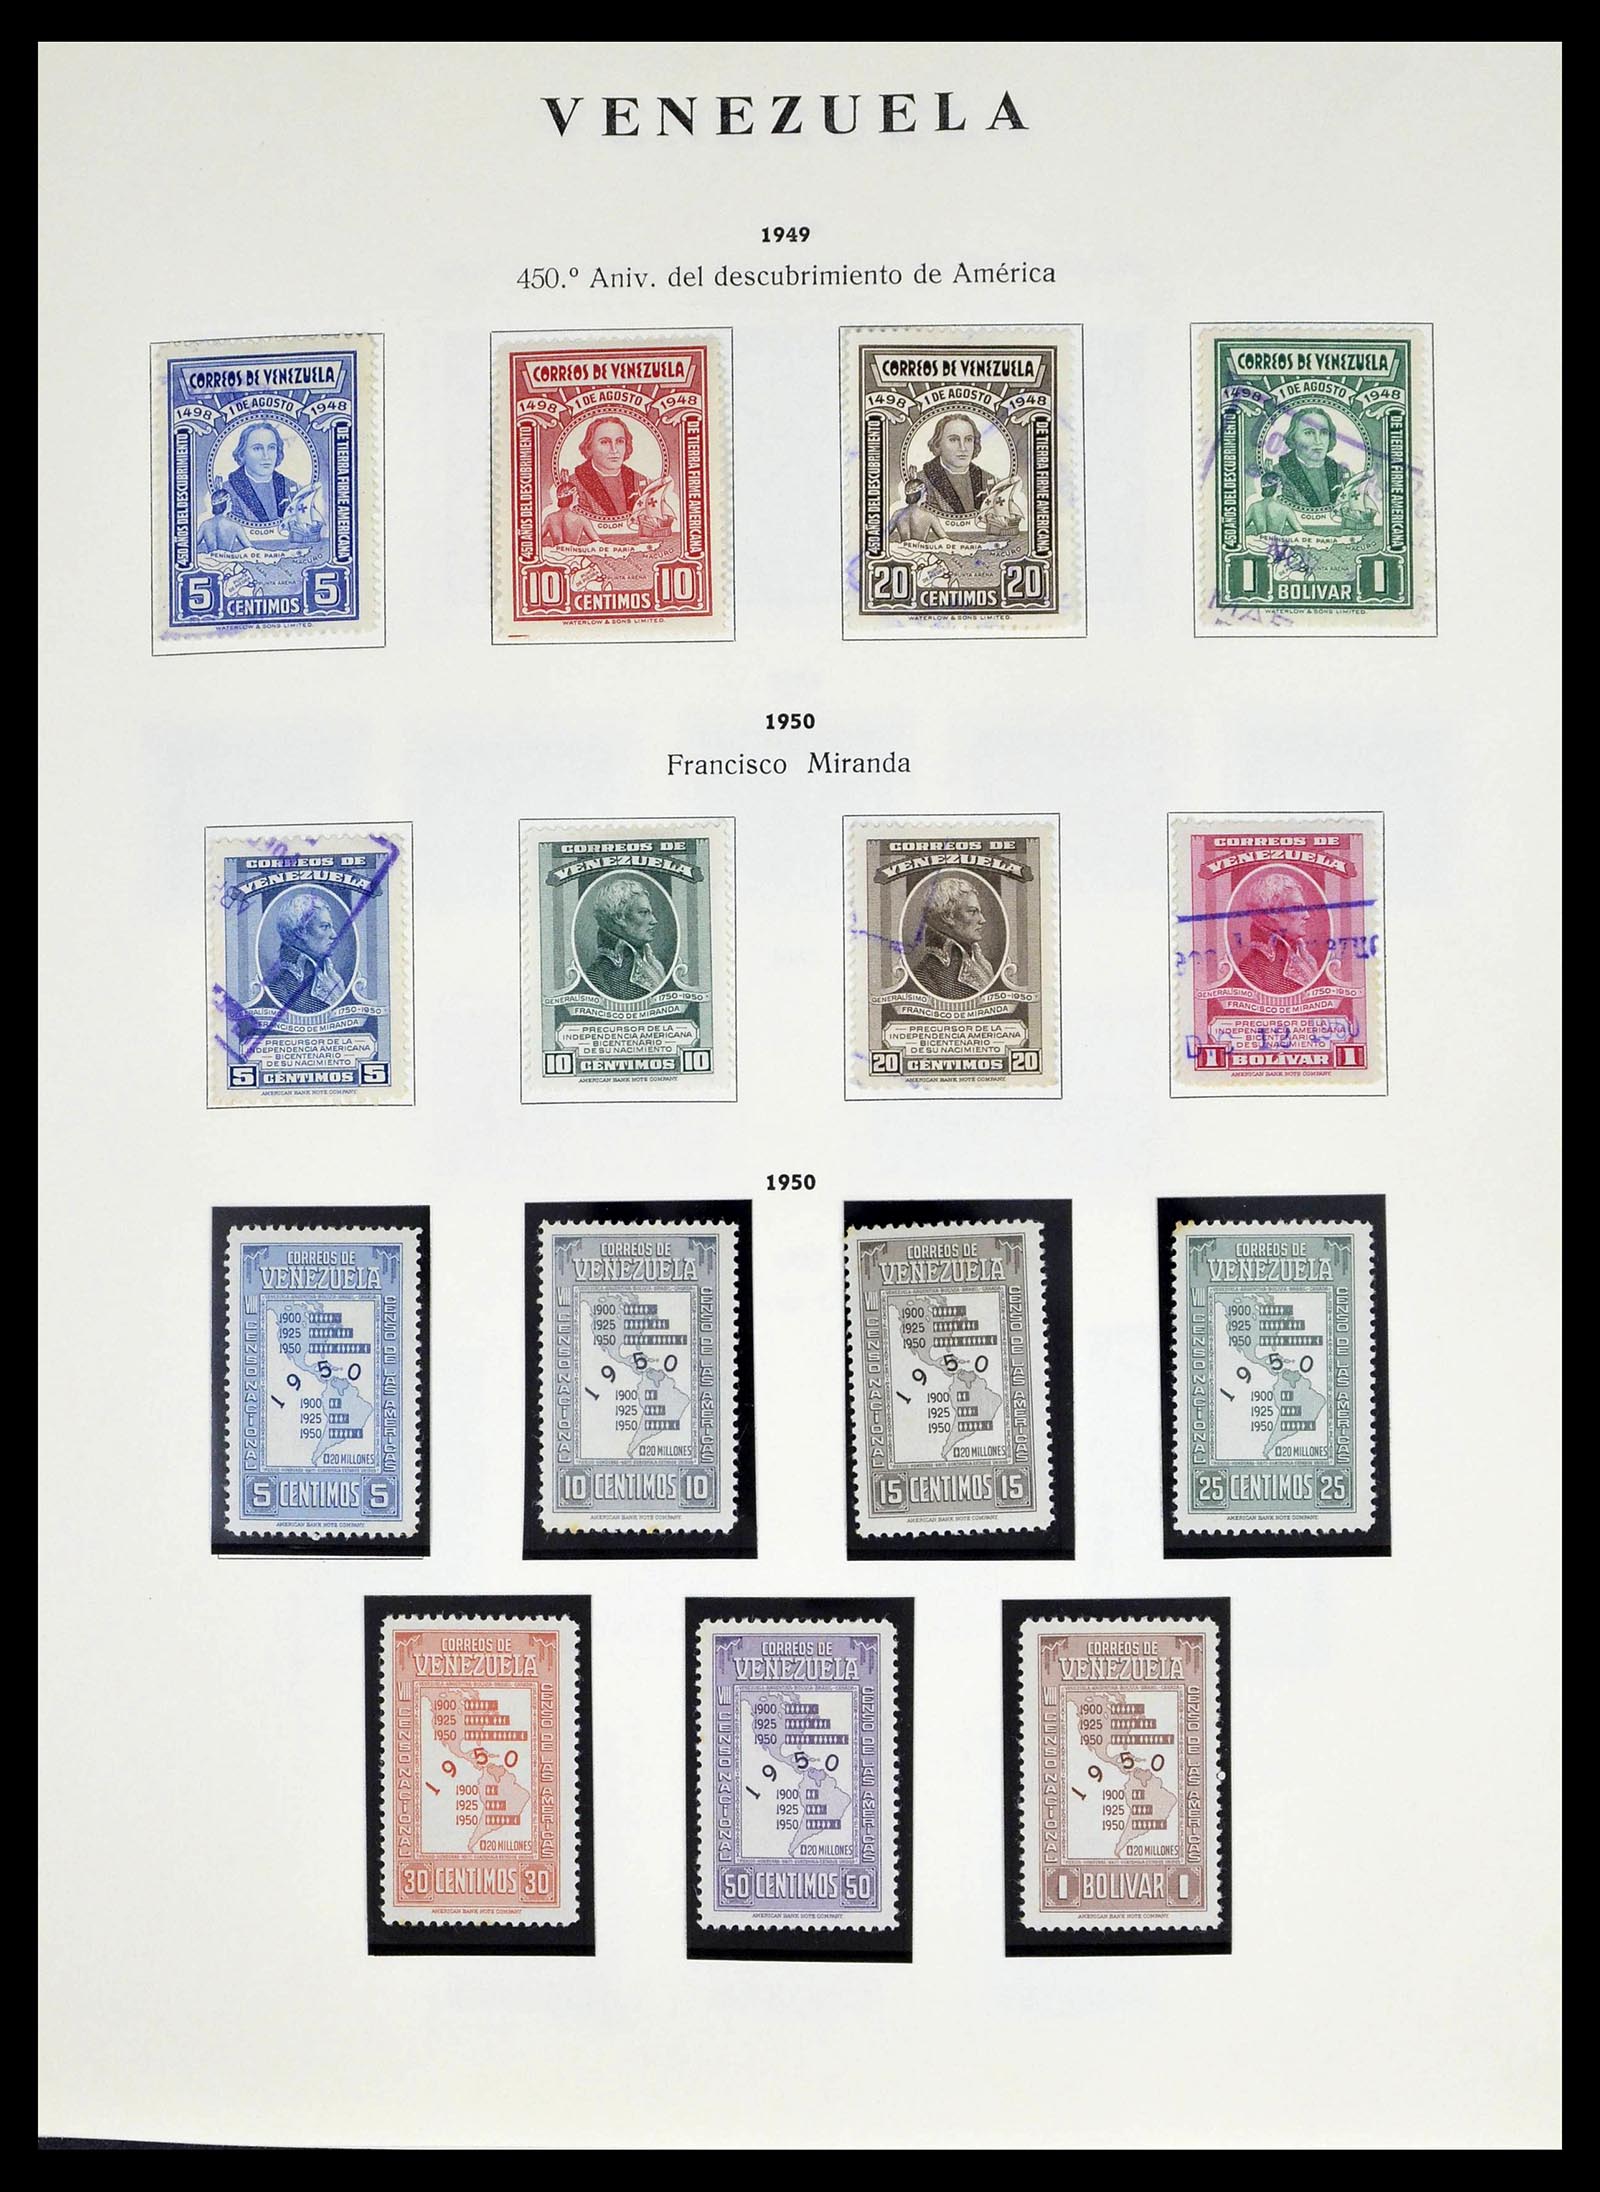 39223 0021 - Stamp collection 39223 Venezuela 1859-1984.